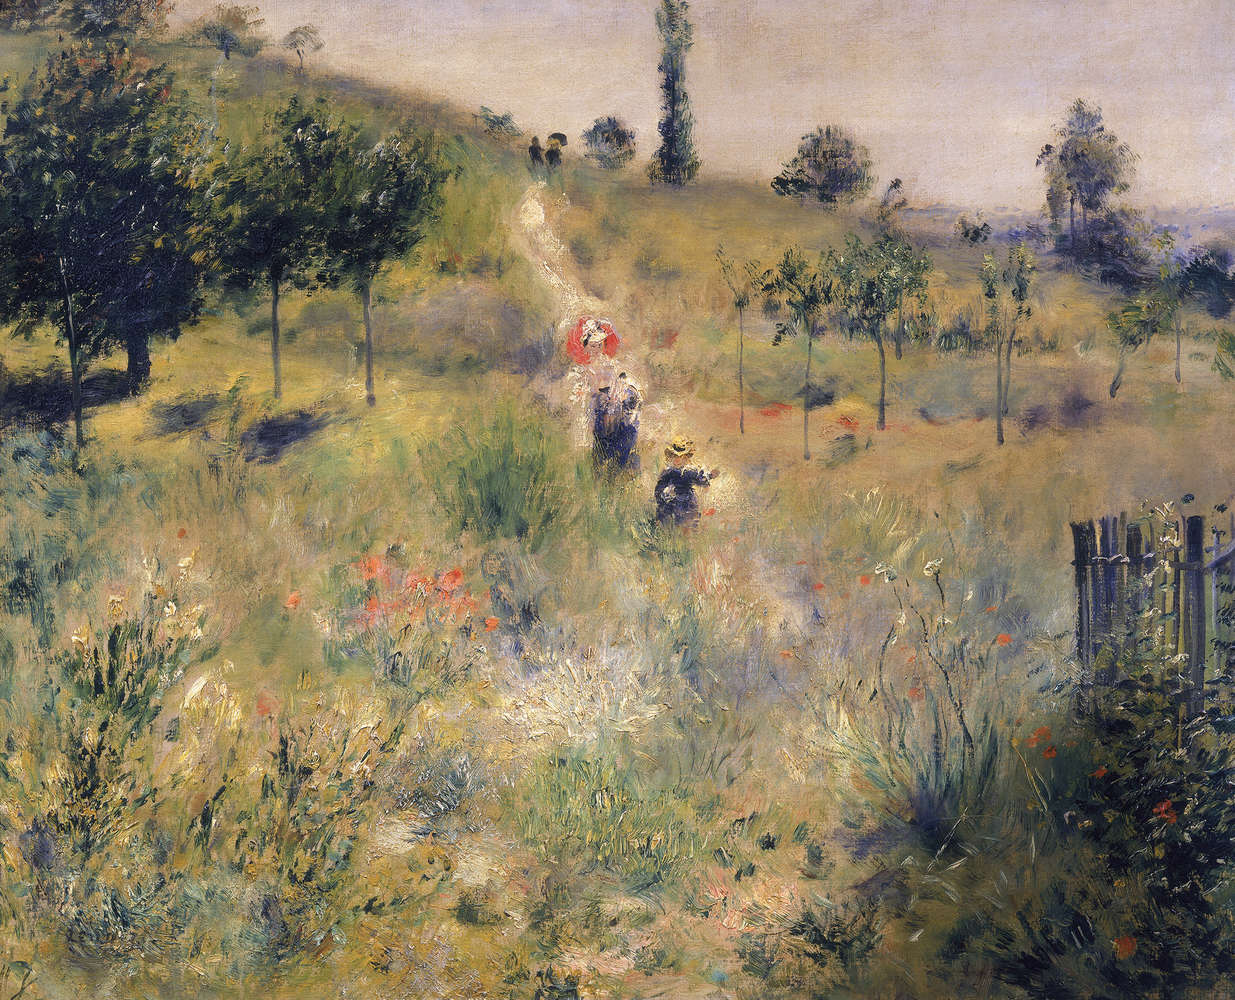             Fotomurali "Sentiero in salita tra l'erba alta" di Pierre Auguste Renoir
        